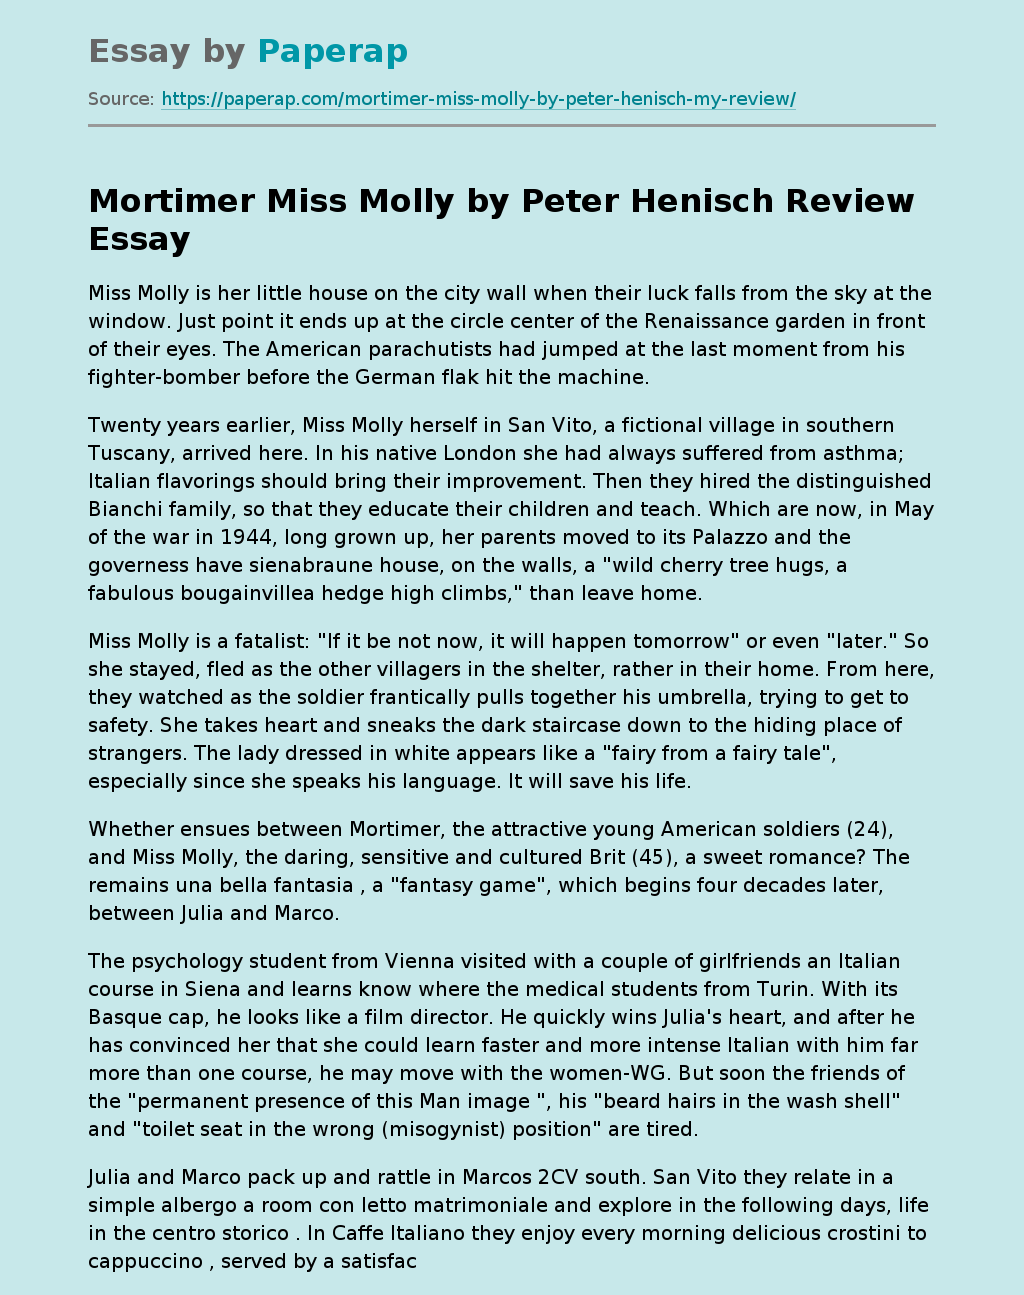 "Mortimer Miss Molly" by Peter Henisch